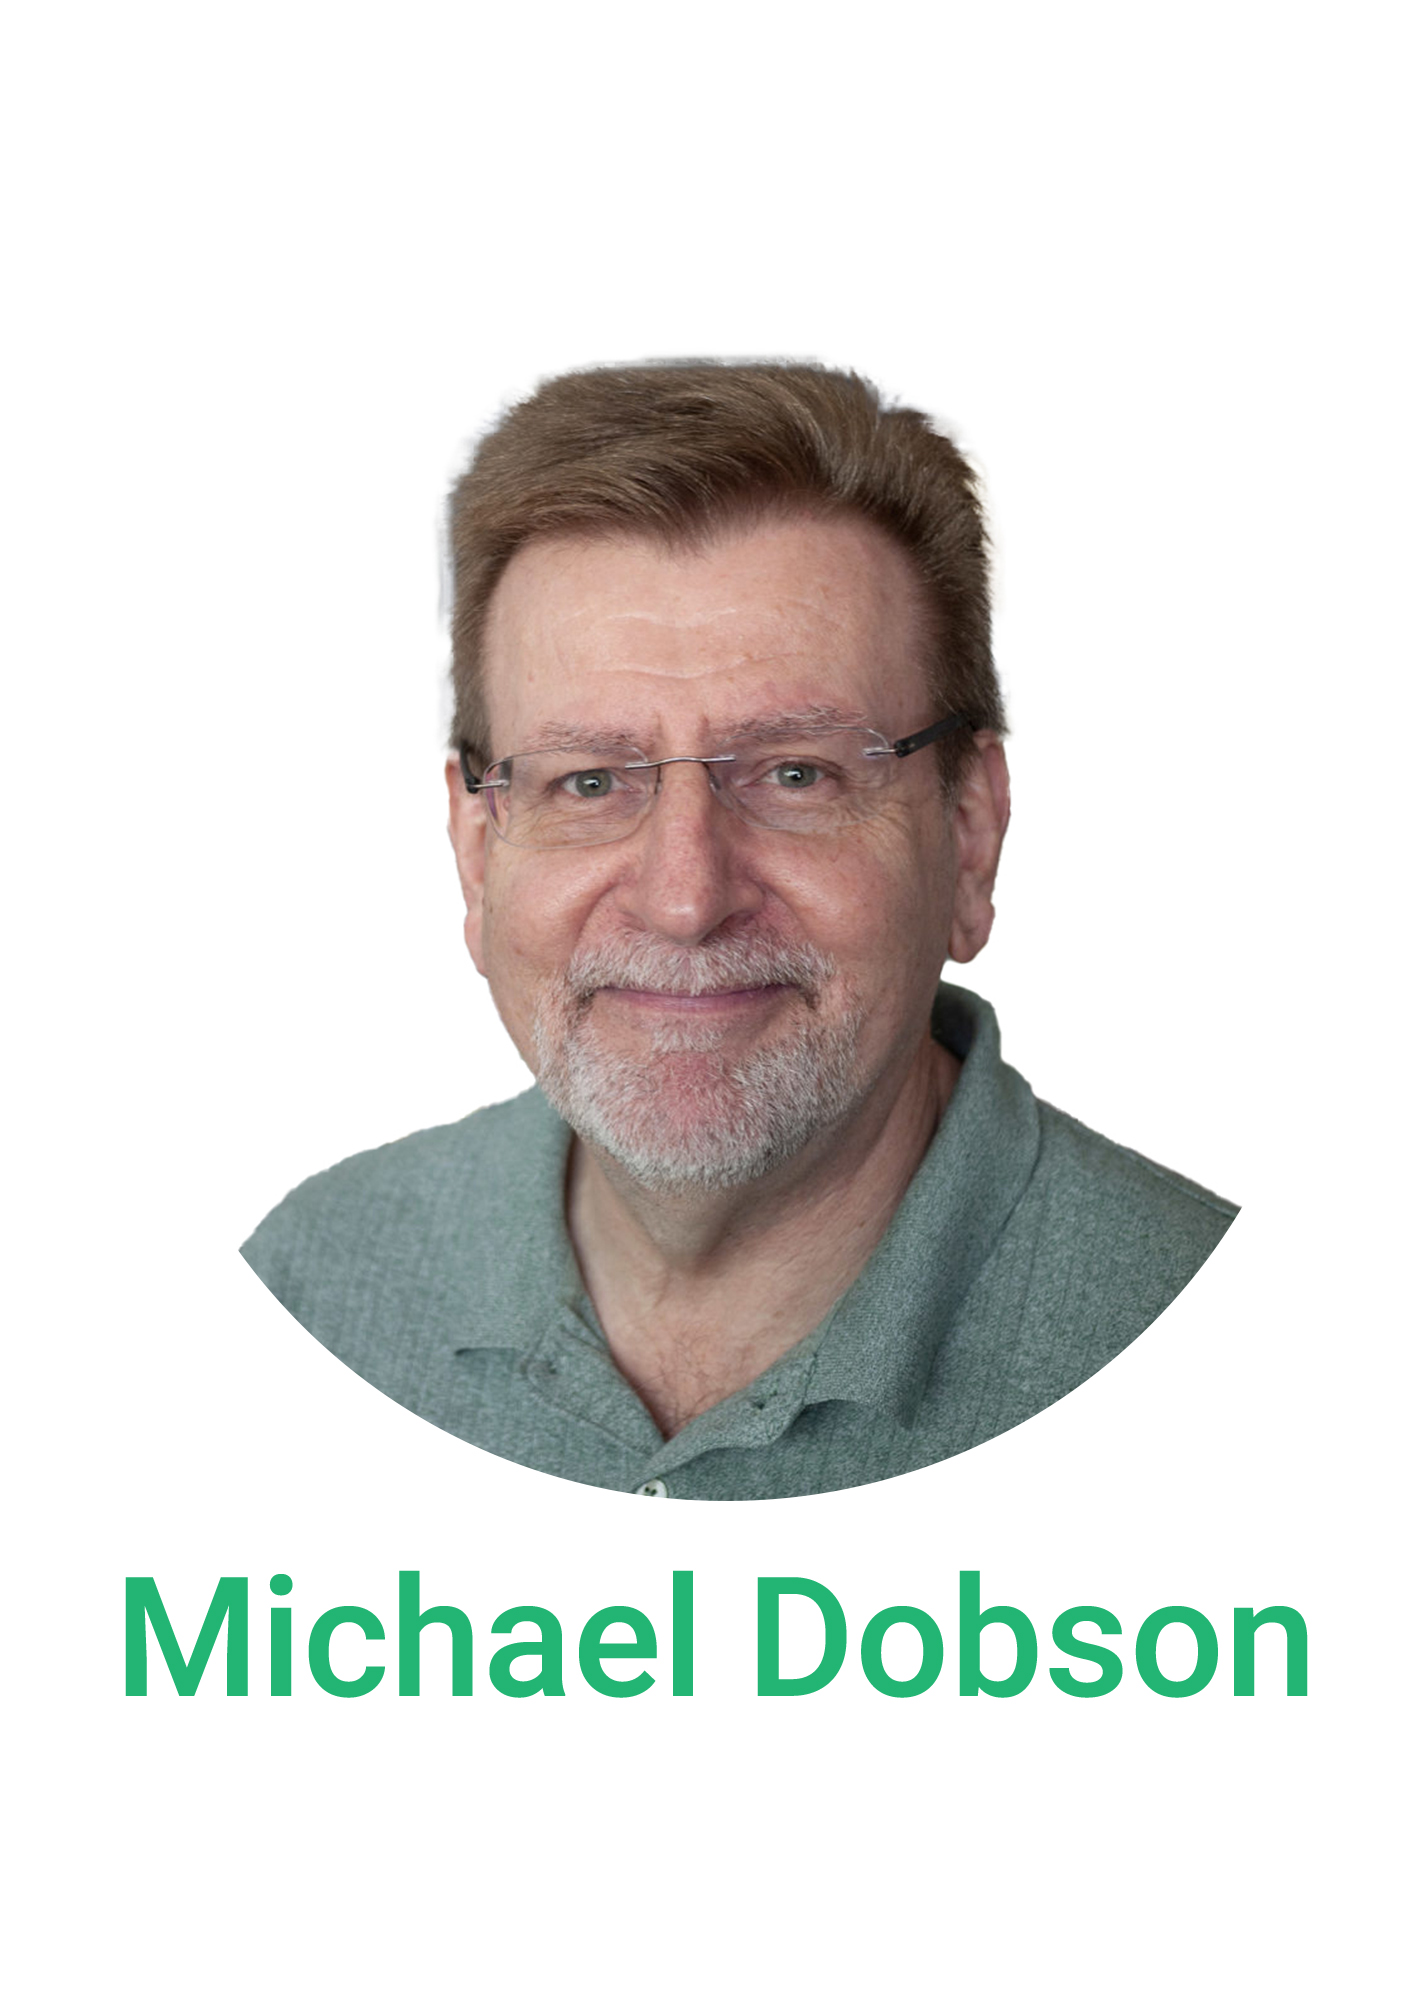 Michael Dobson